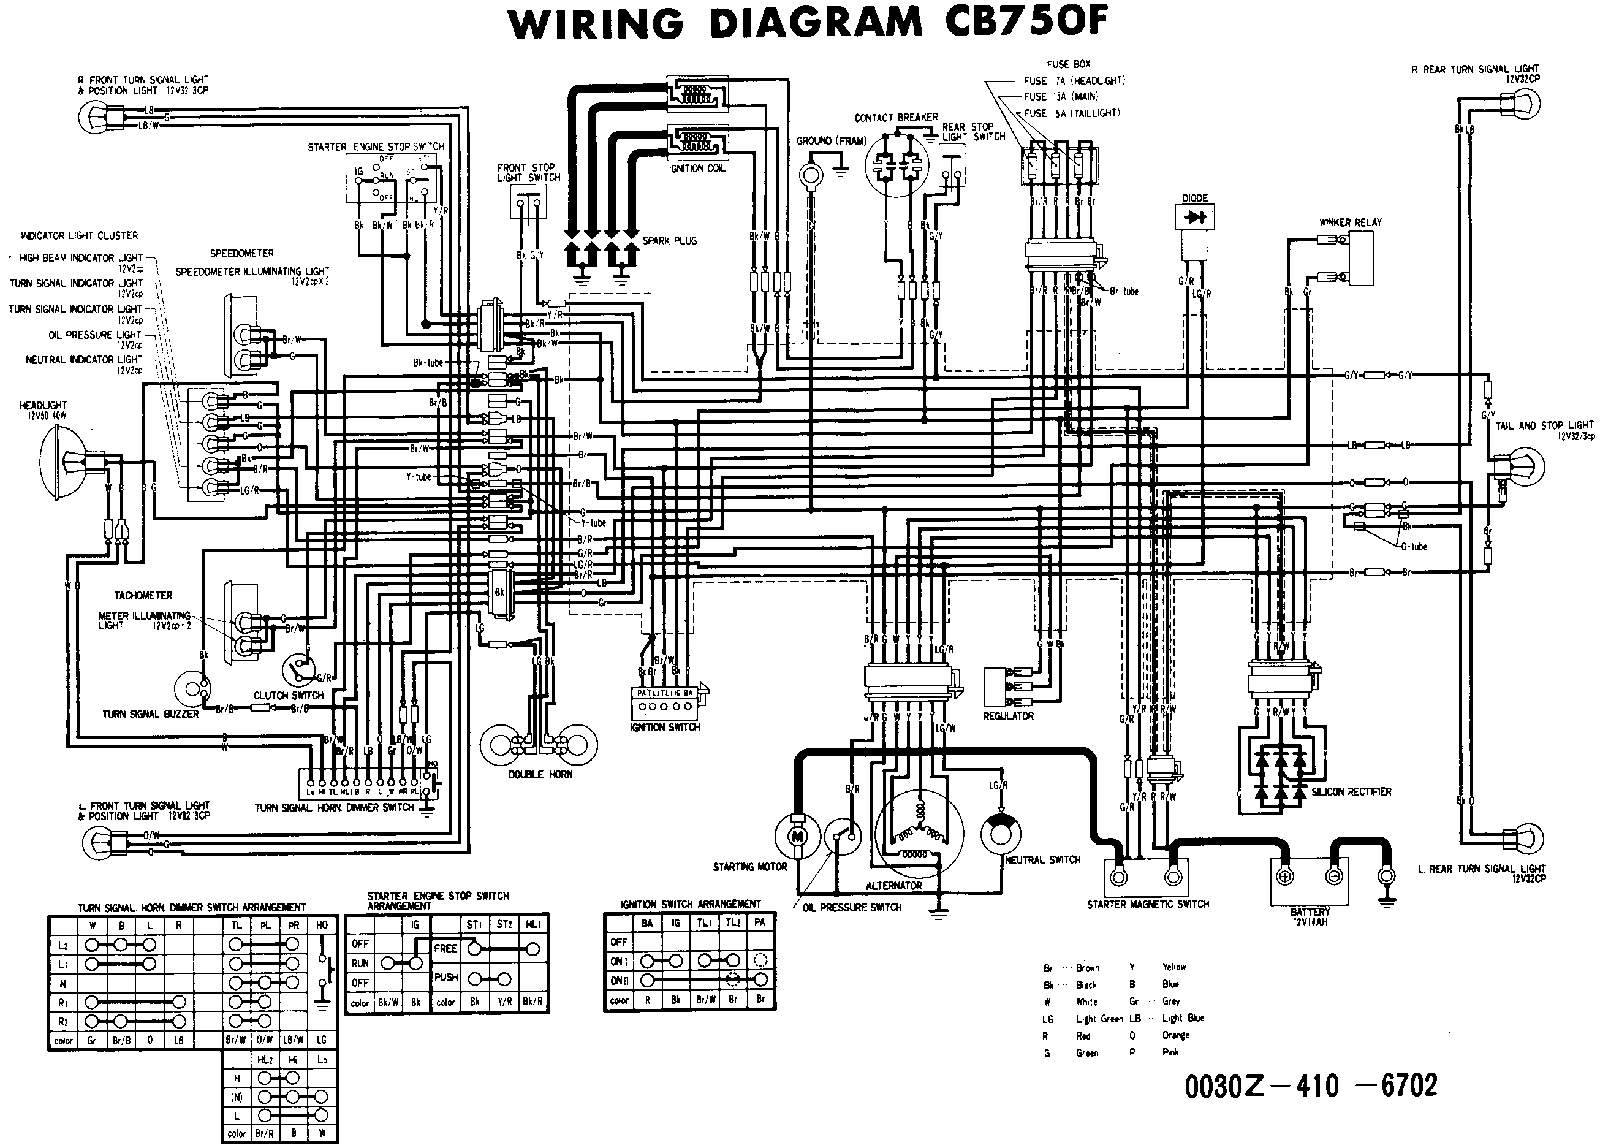 [DIAGRAM] Honda Cb 750 Wiring Diagram FULL Version HD Quality Wiring